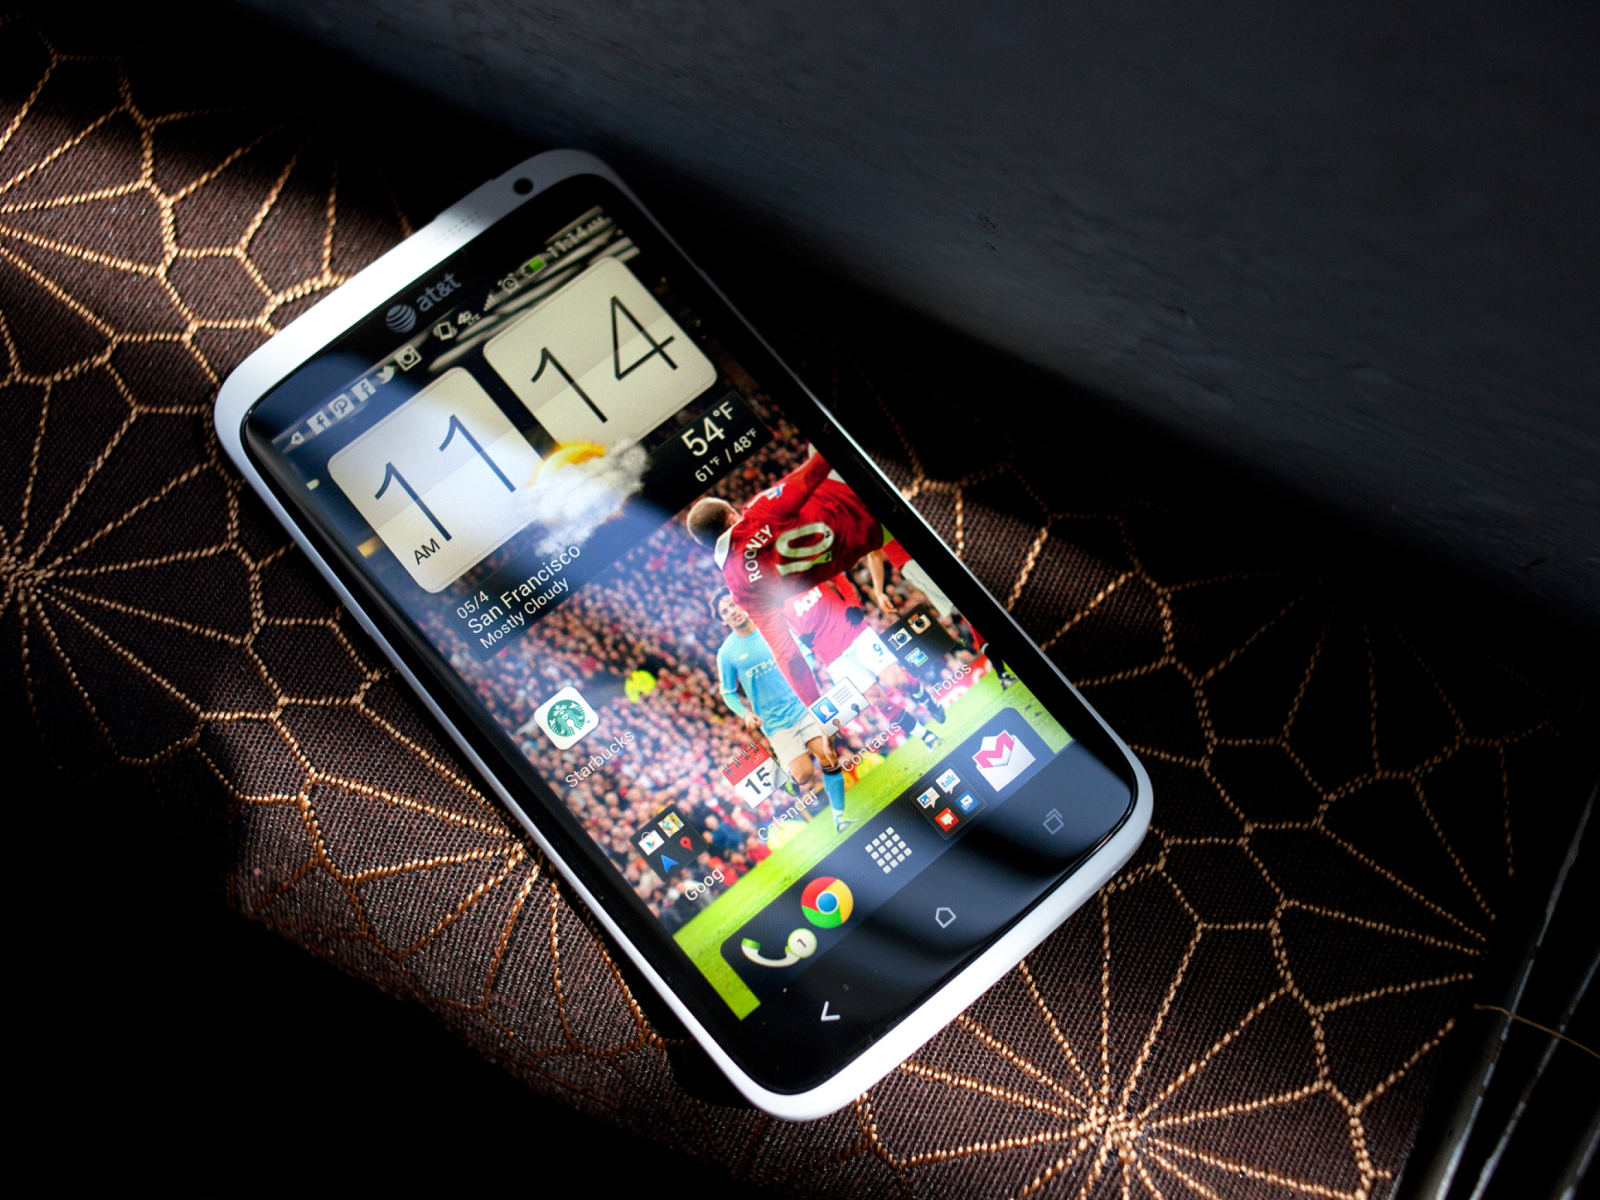 HTC One X - Smartphone wallpaper 1600x1200